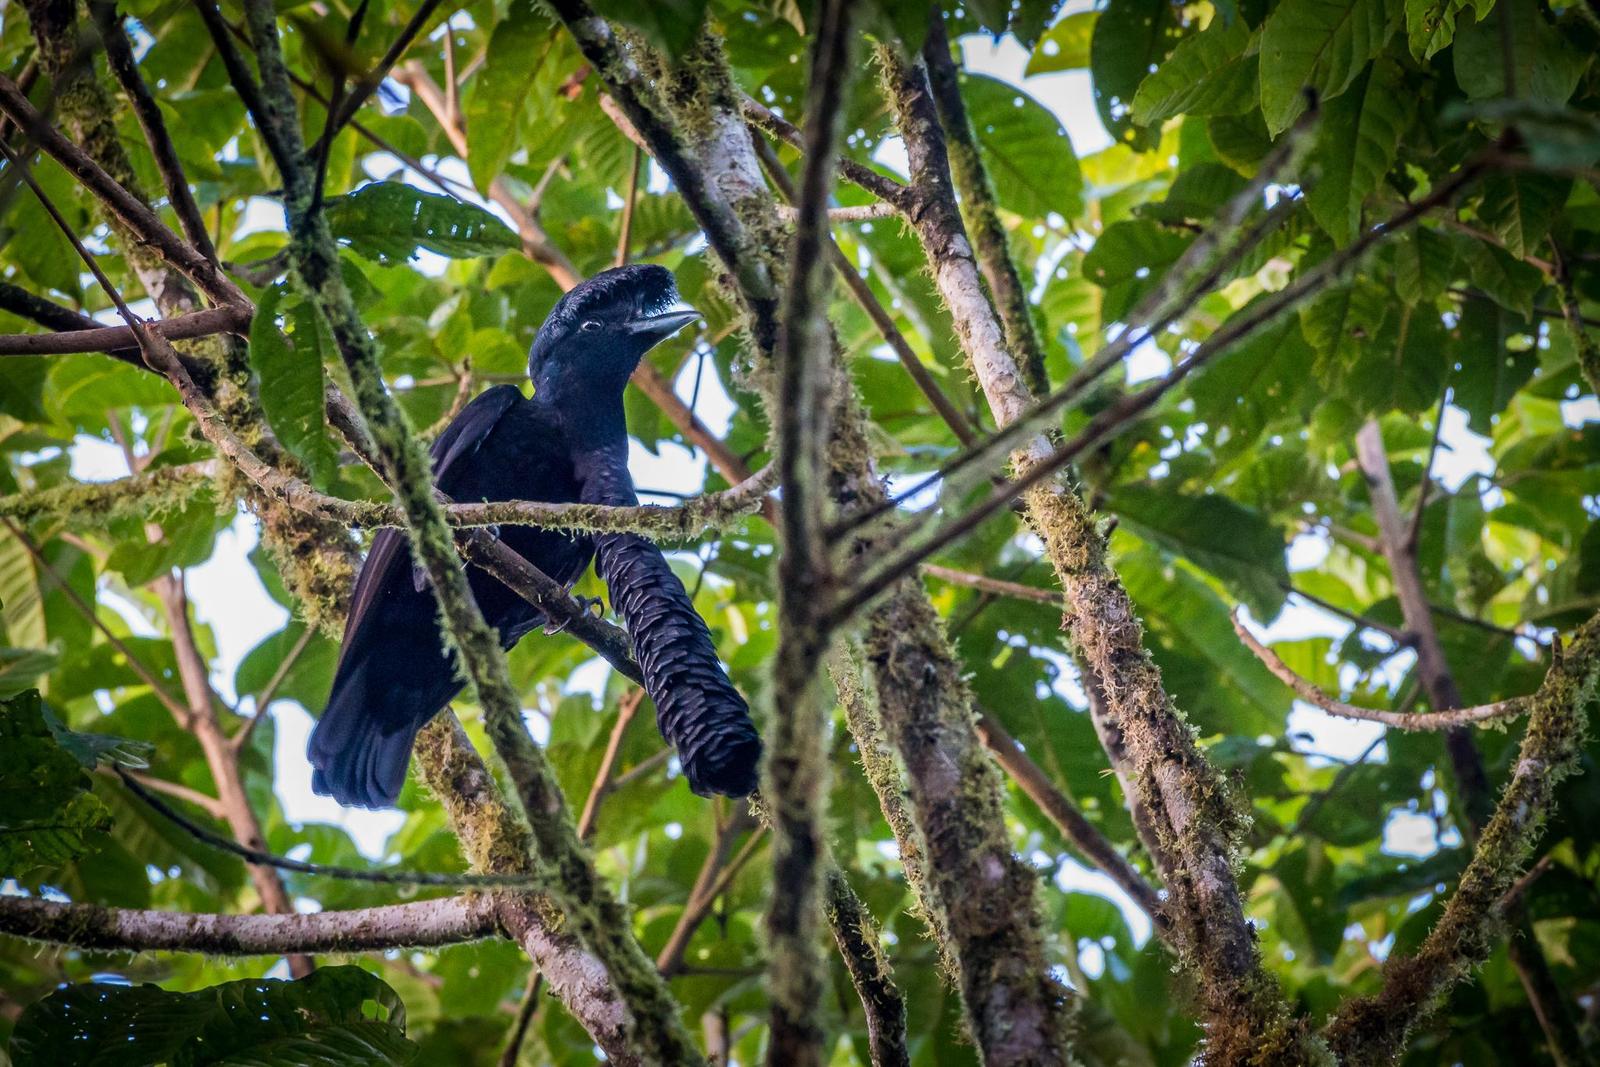 Long-wattled Umbrellabird Photo by pancho enriquez